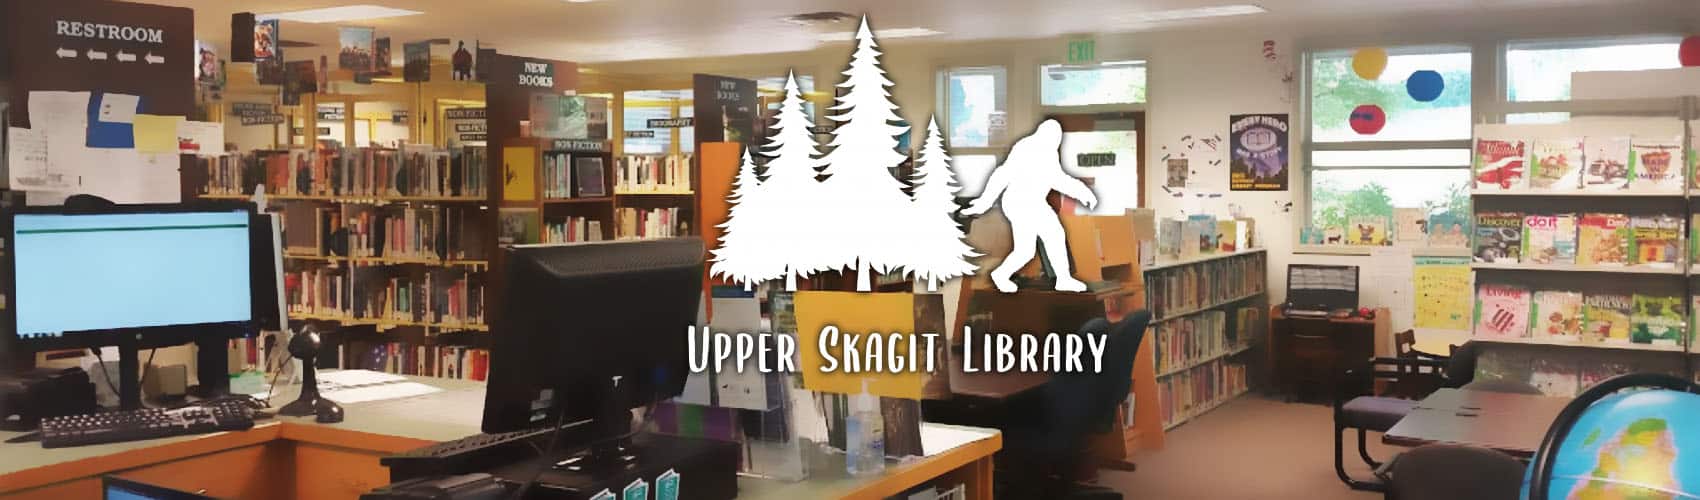 Upper Skagit Library inside with logo